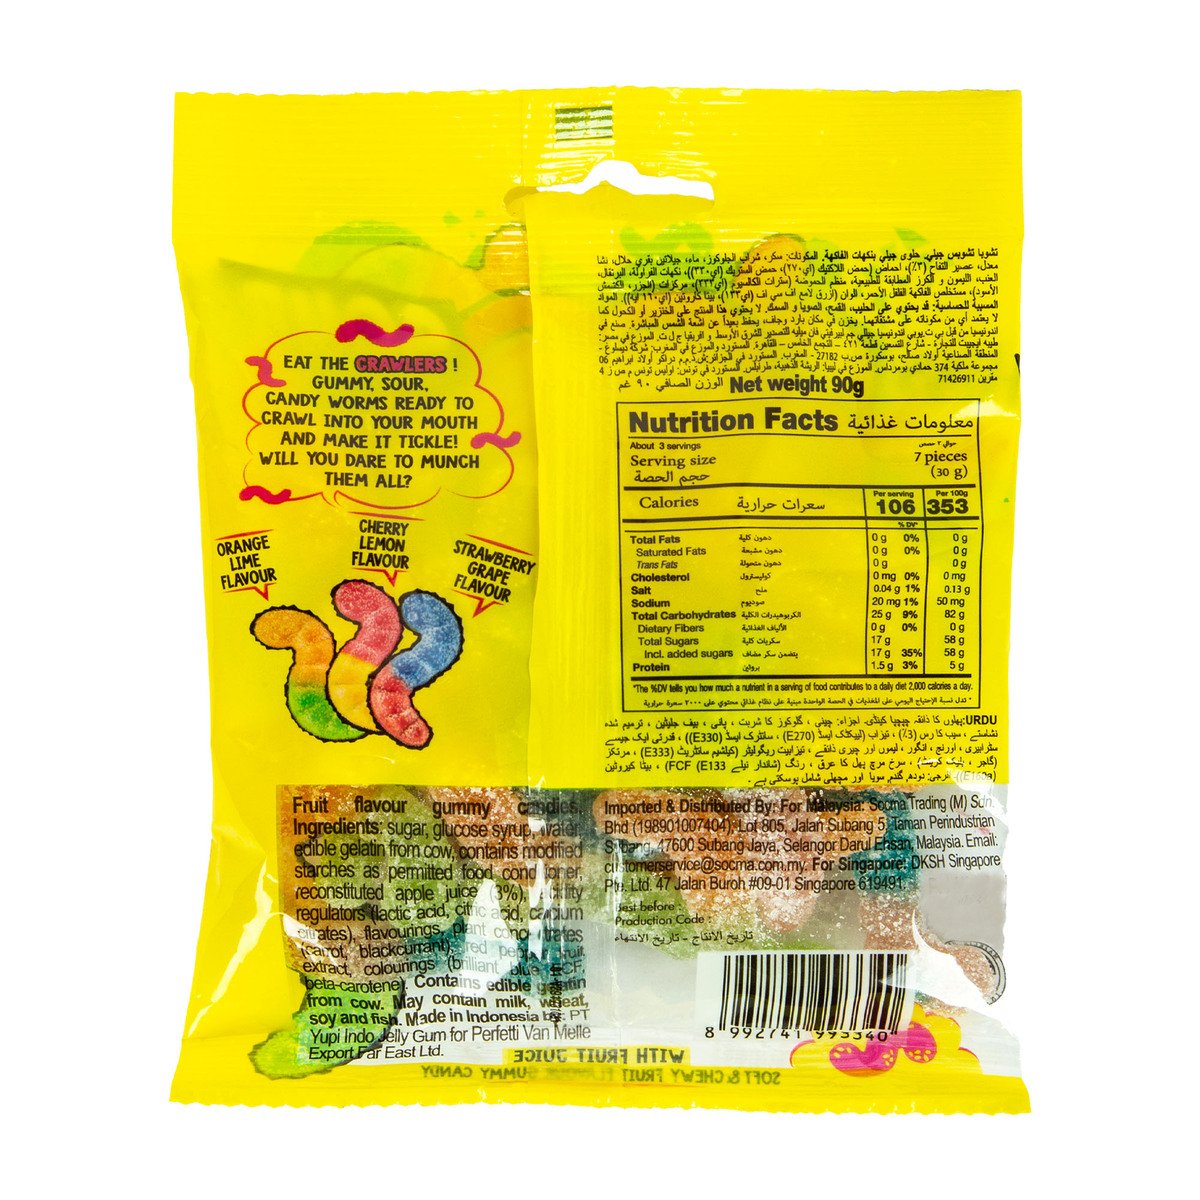 Chupa Chups Crawlers Sour Jelly 90 g